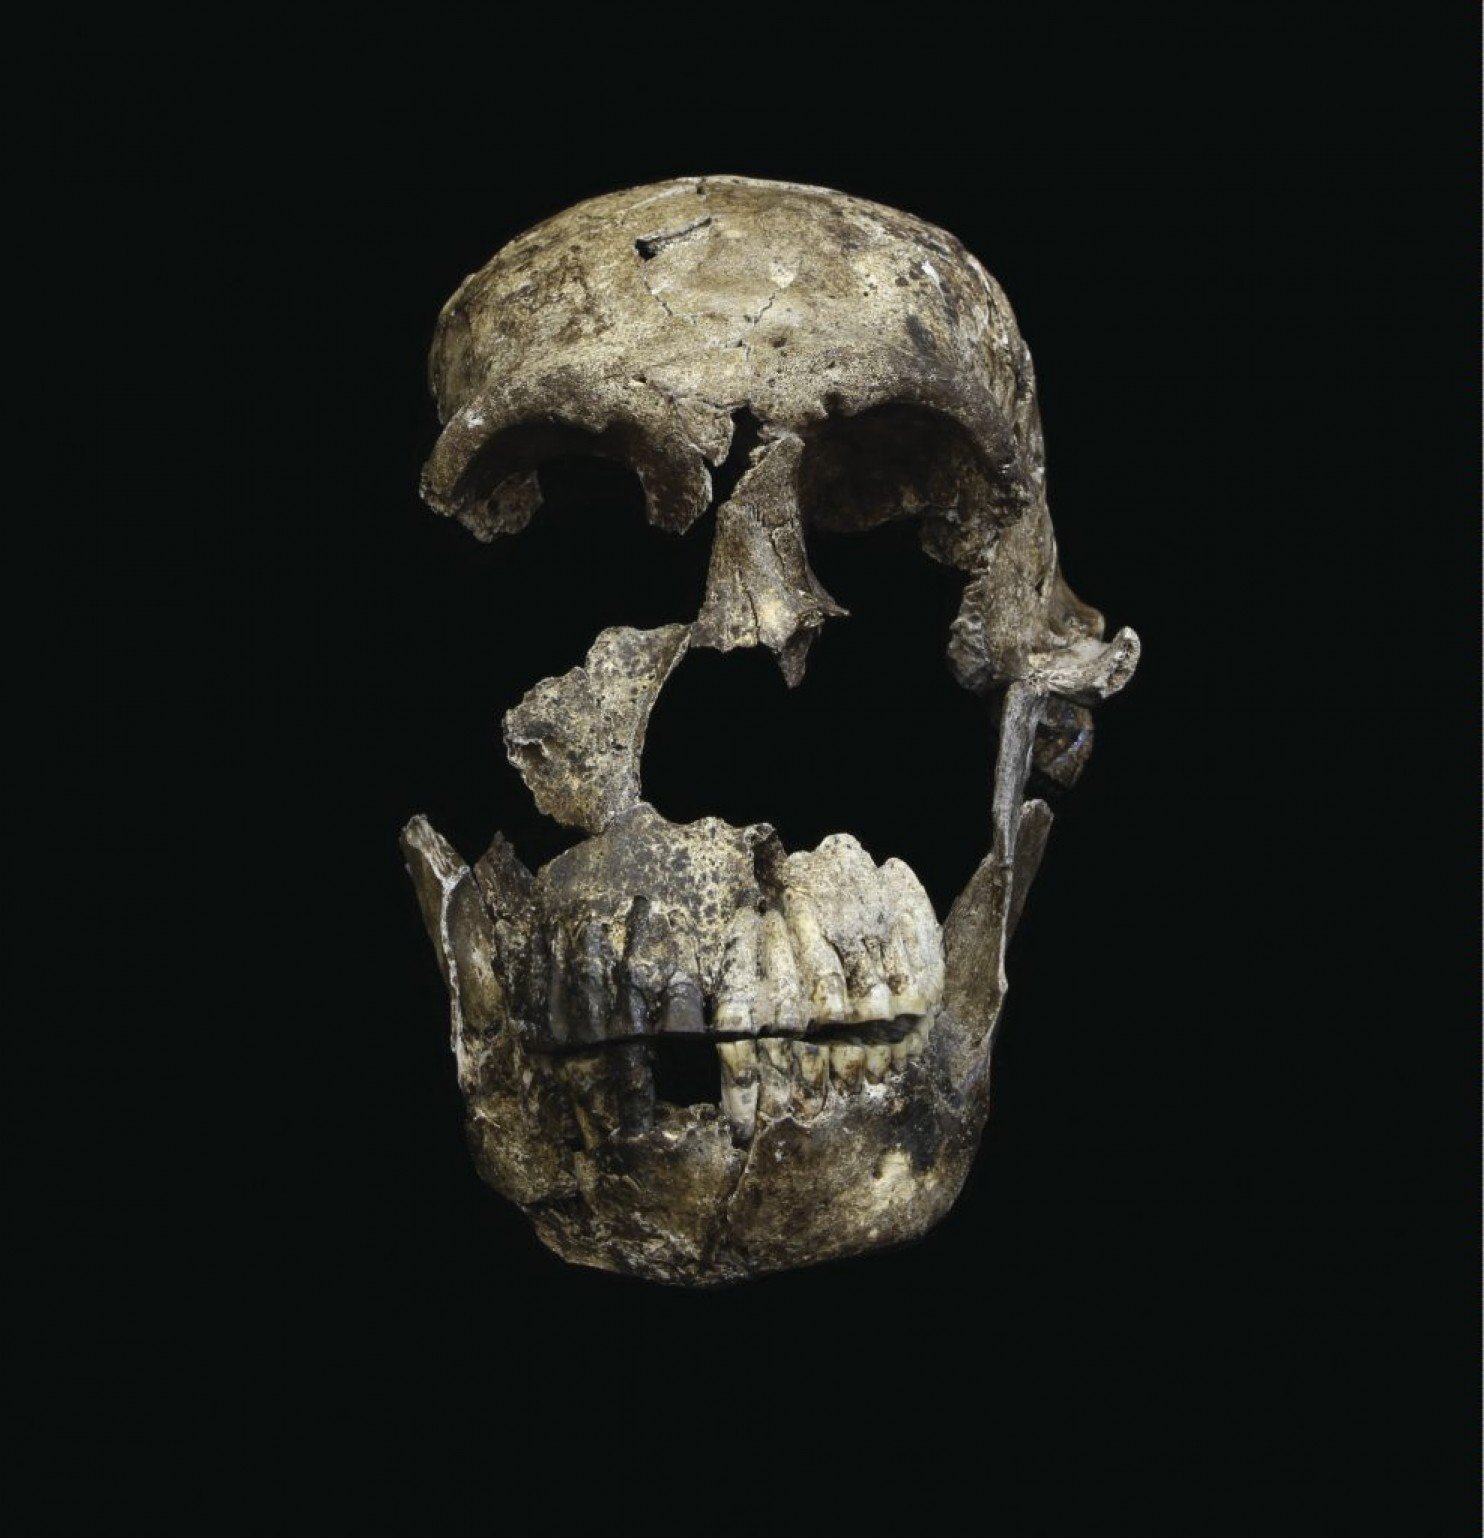 "Neo" skull of Homo naledi from the Lesedi Chamber. (John Hawks/University of the Witwatersrand)